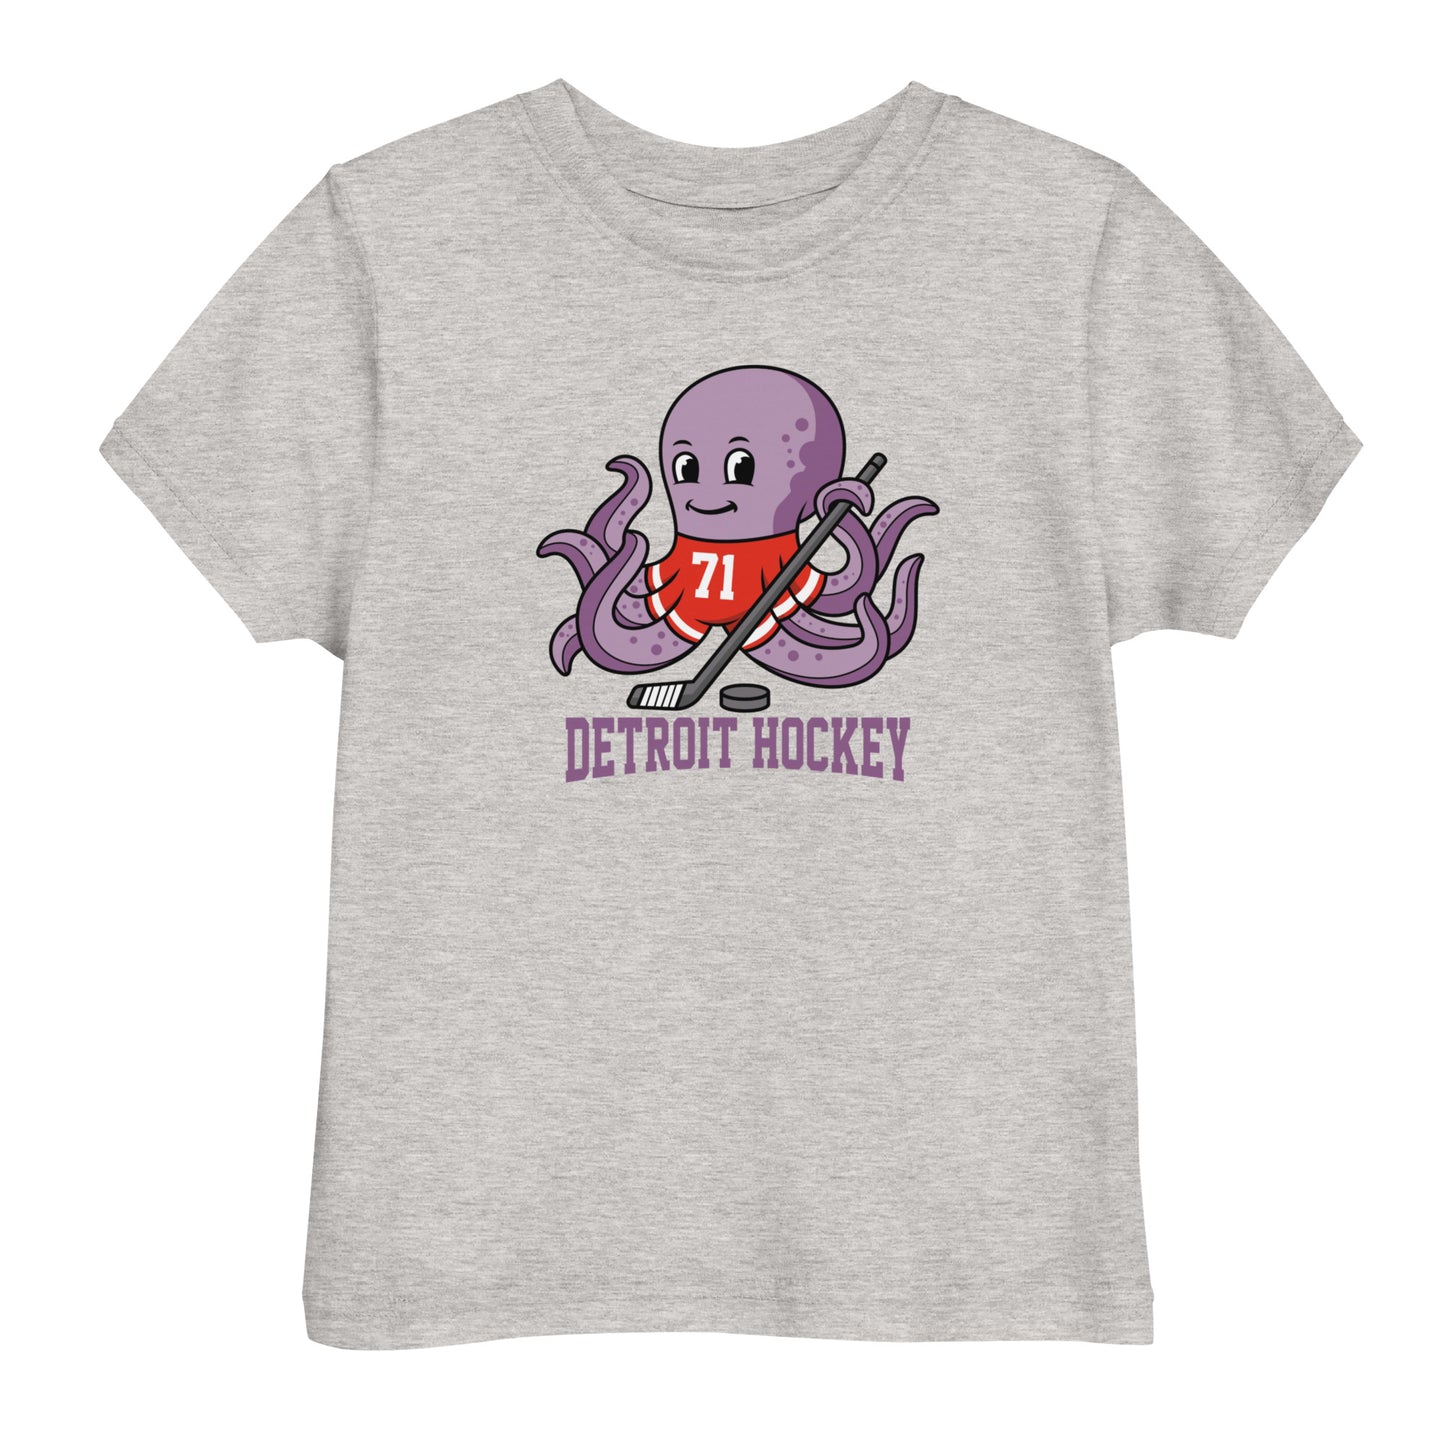 Detroit Hockey Toddler jersey t-shirt